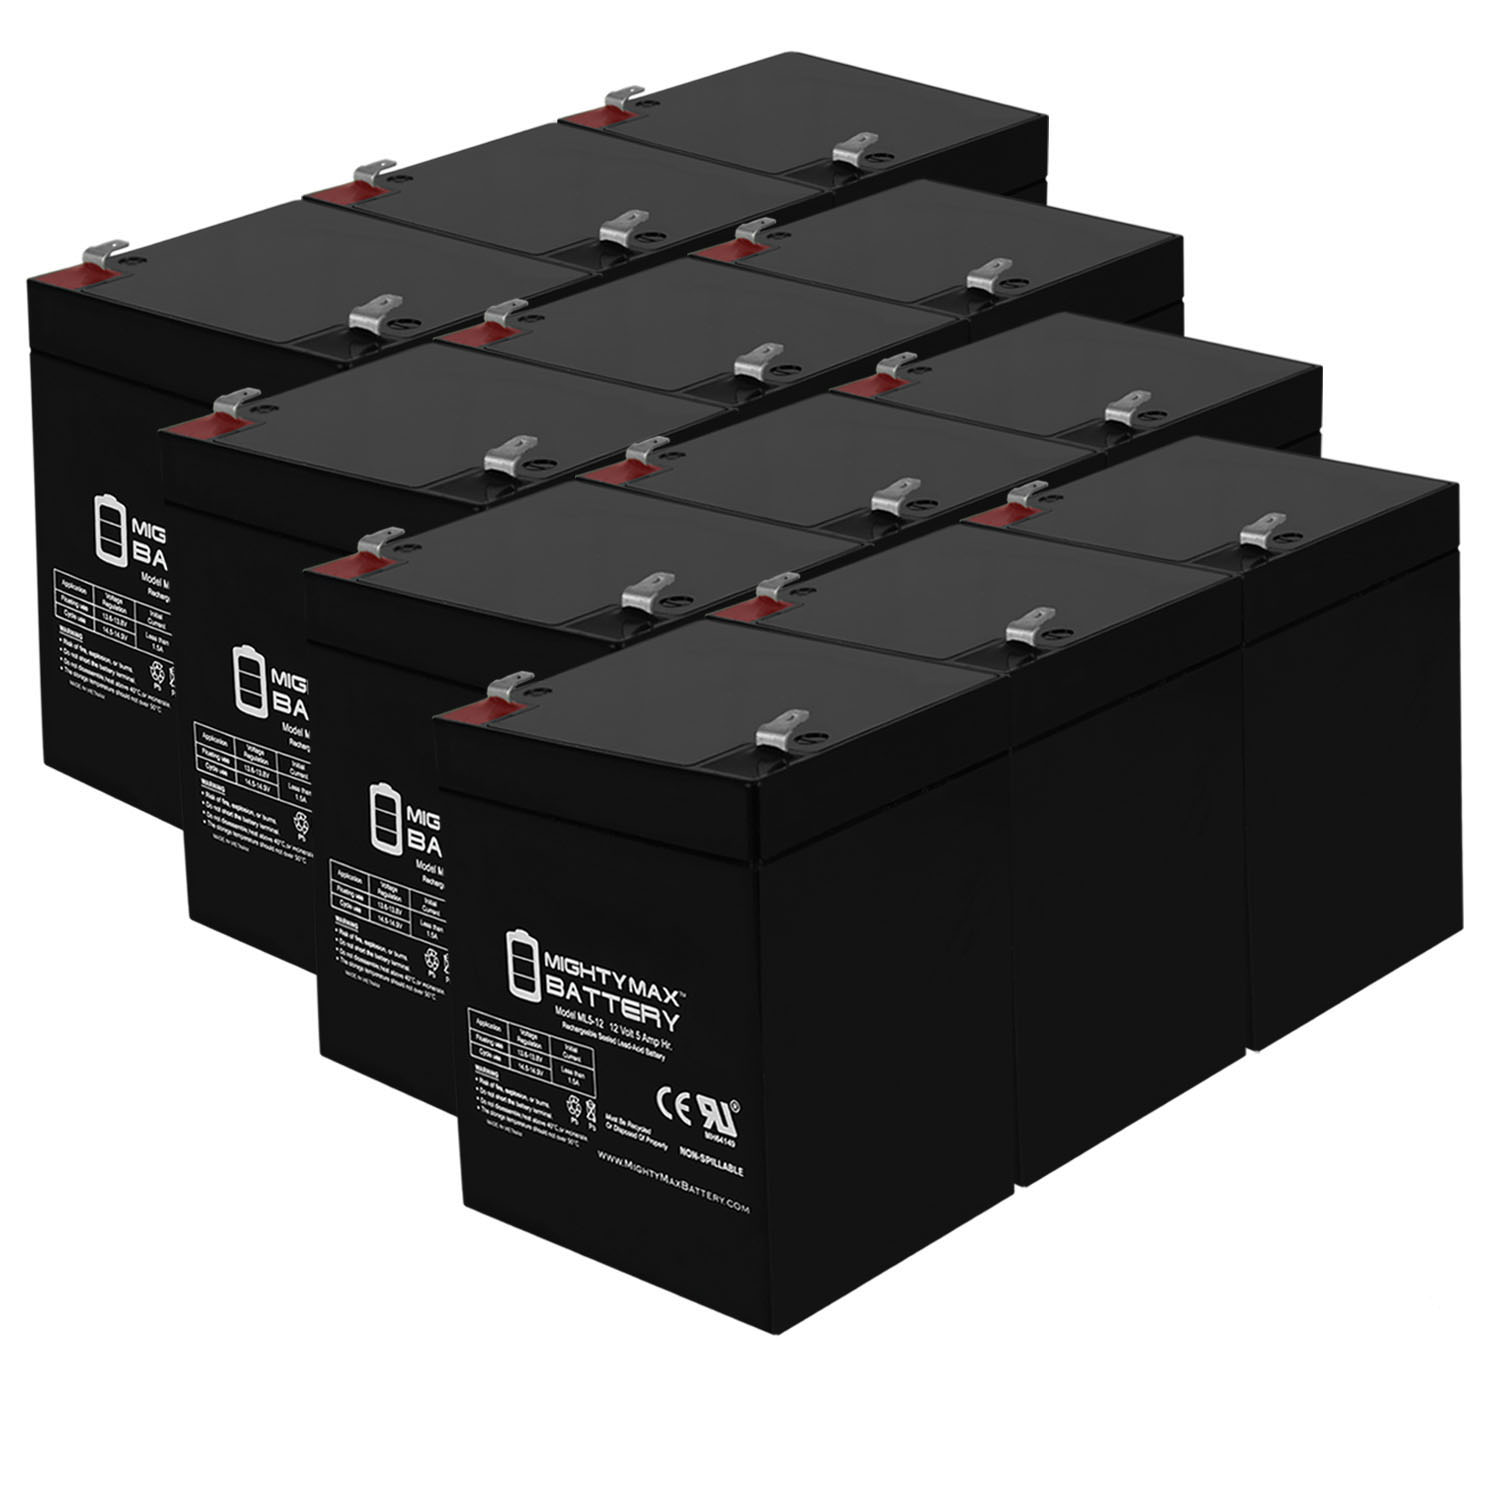 12V 5AH SLA Replacement Battery for Razor Razr MX400 - 12 Pack